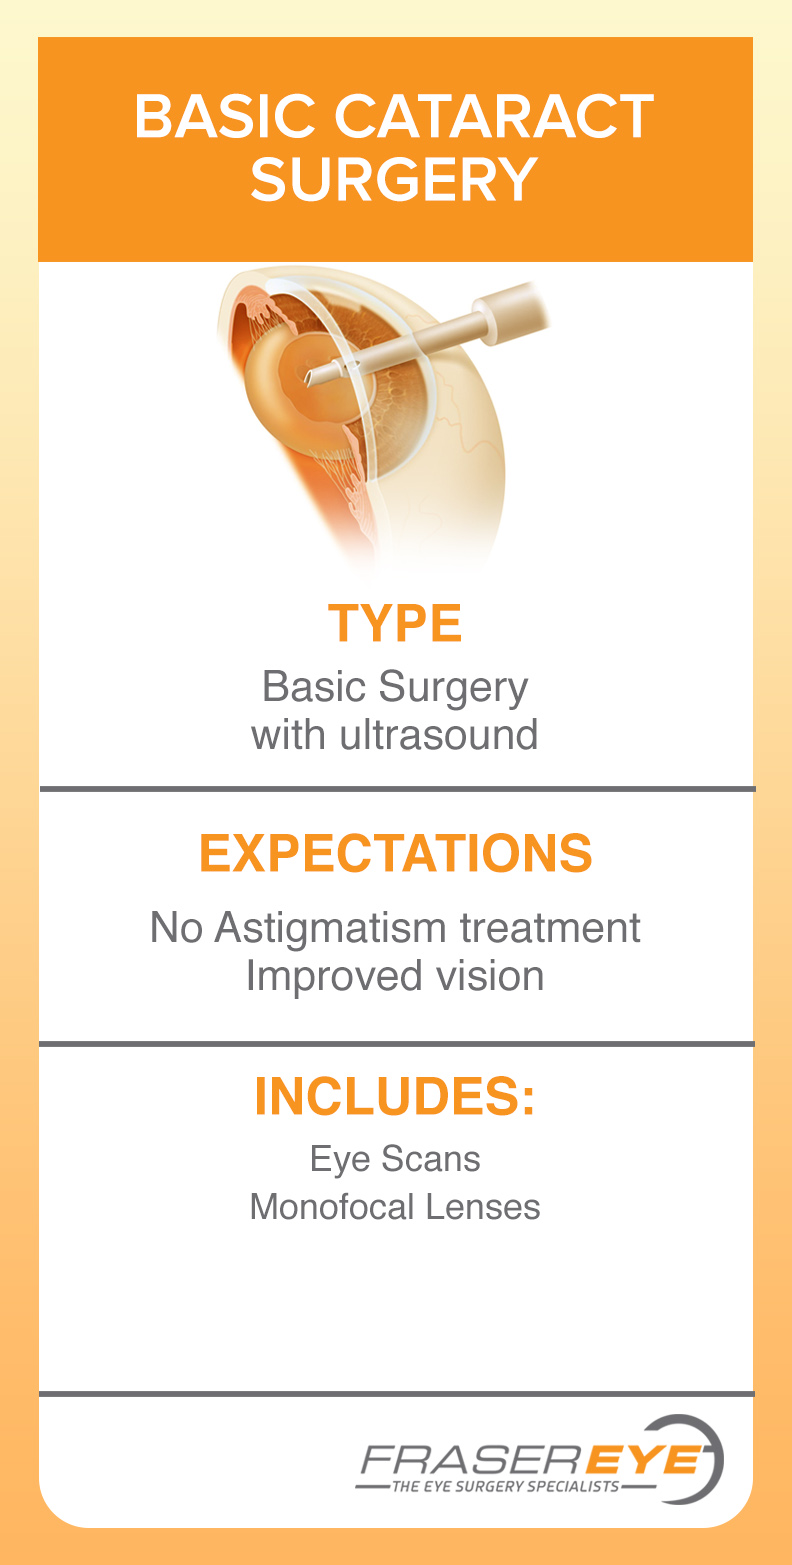 Basic Cataract surgery